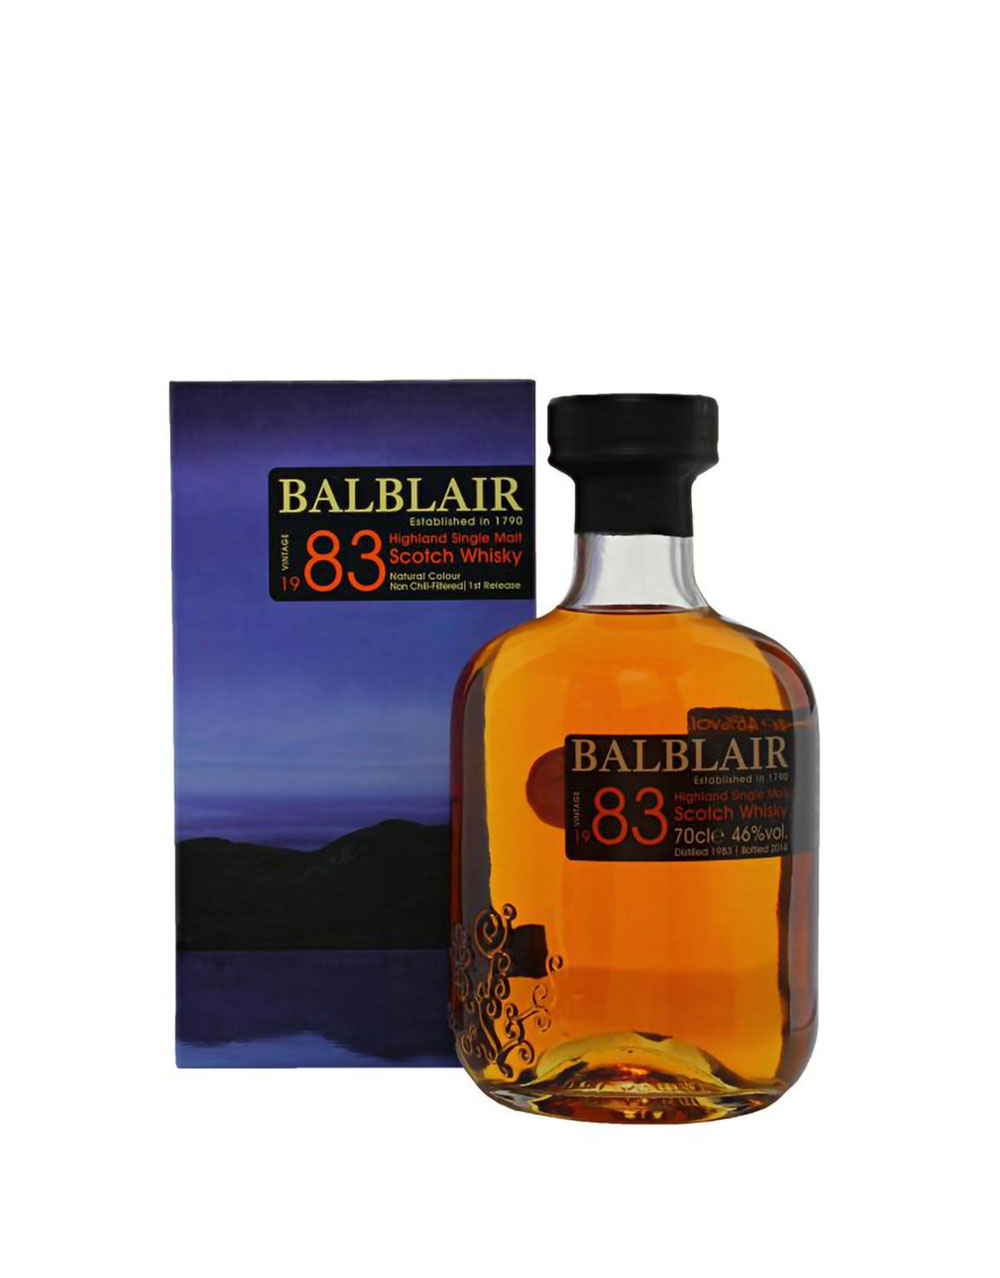 Balblair 1983 1st Release Single Malt Scotch Whisky